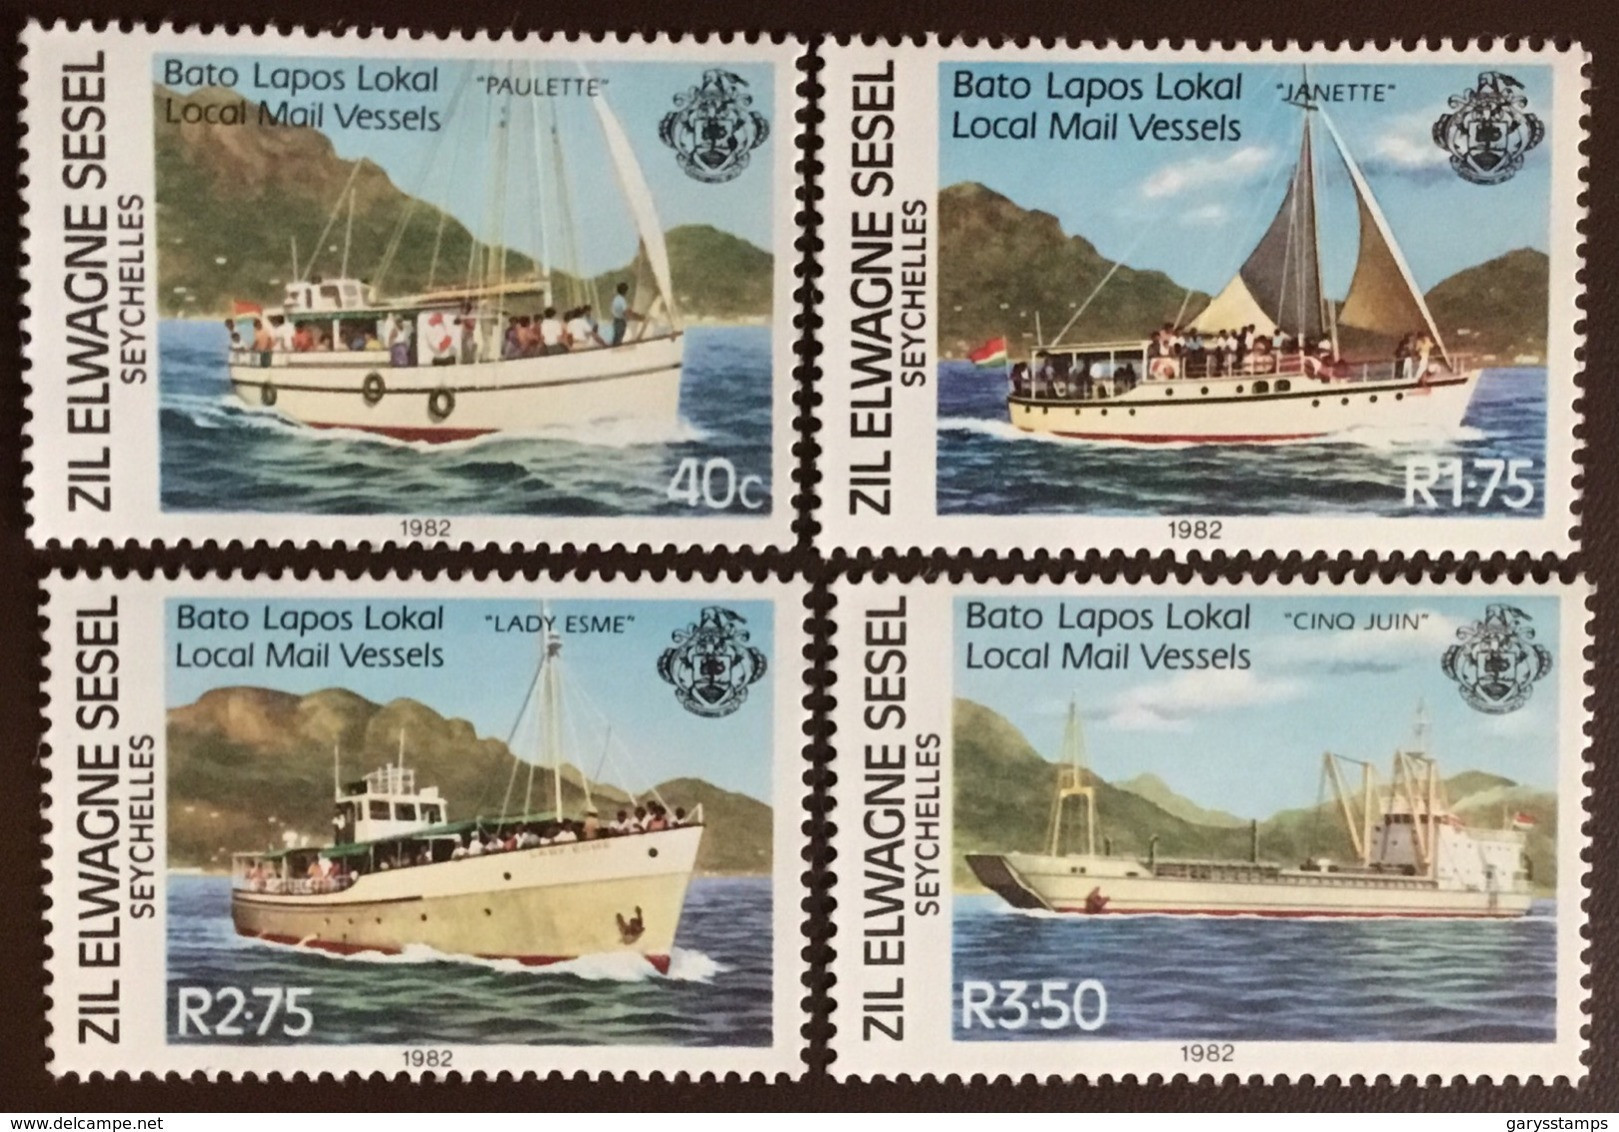 Seychelles Zil Elwagne Sesel 1982 Local Mail Vessels Ships MNH - Seychelles (1976-...)